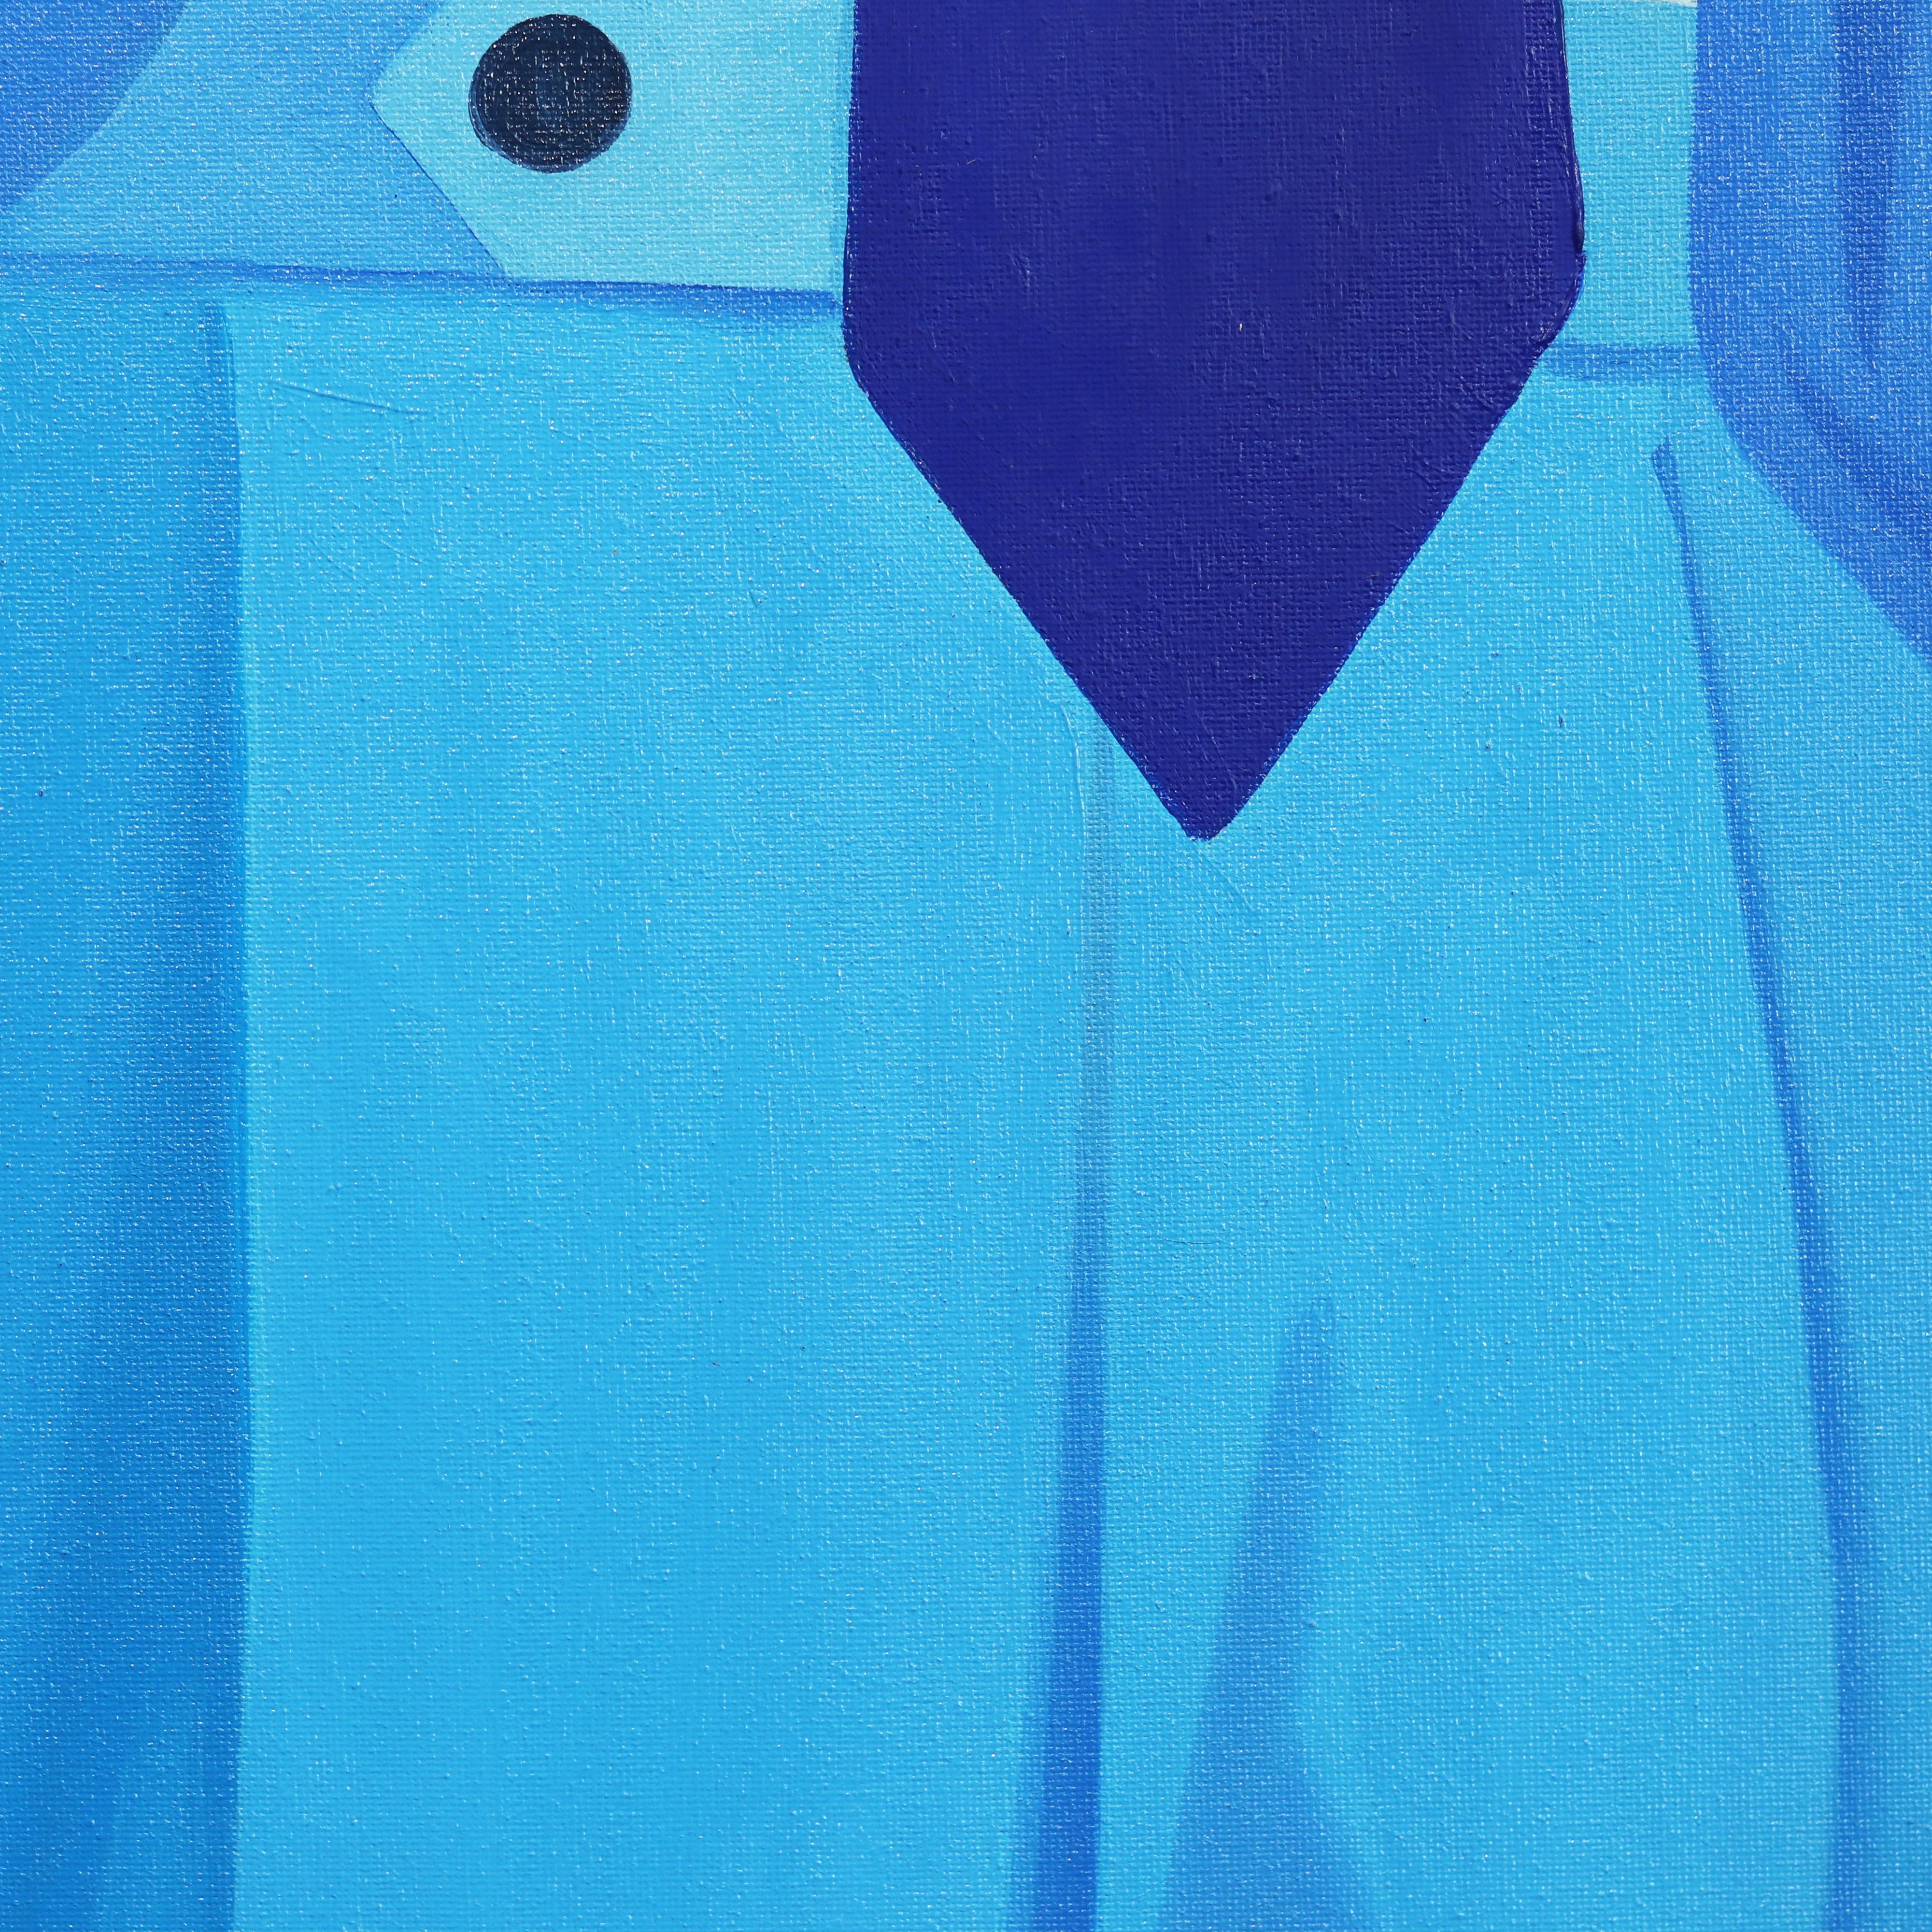 The Man in Blue - Pop Art Minimalist Figurative Original Artwork on Canvas For Sale 8